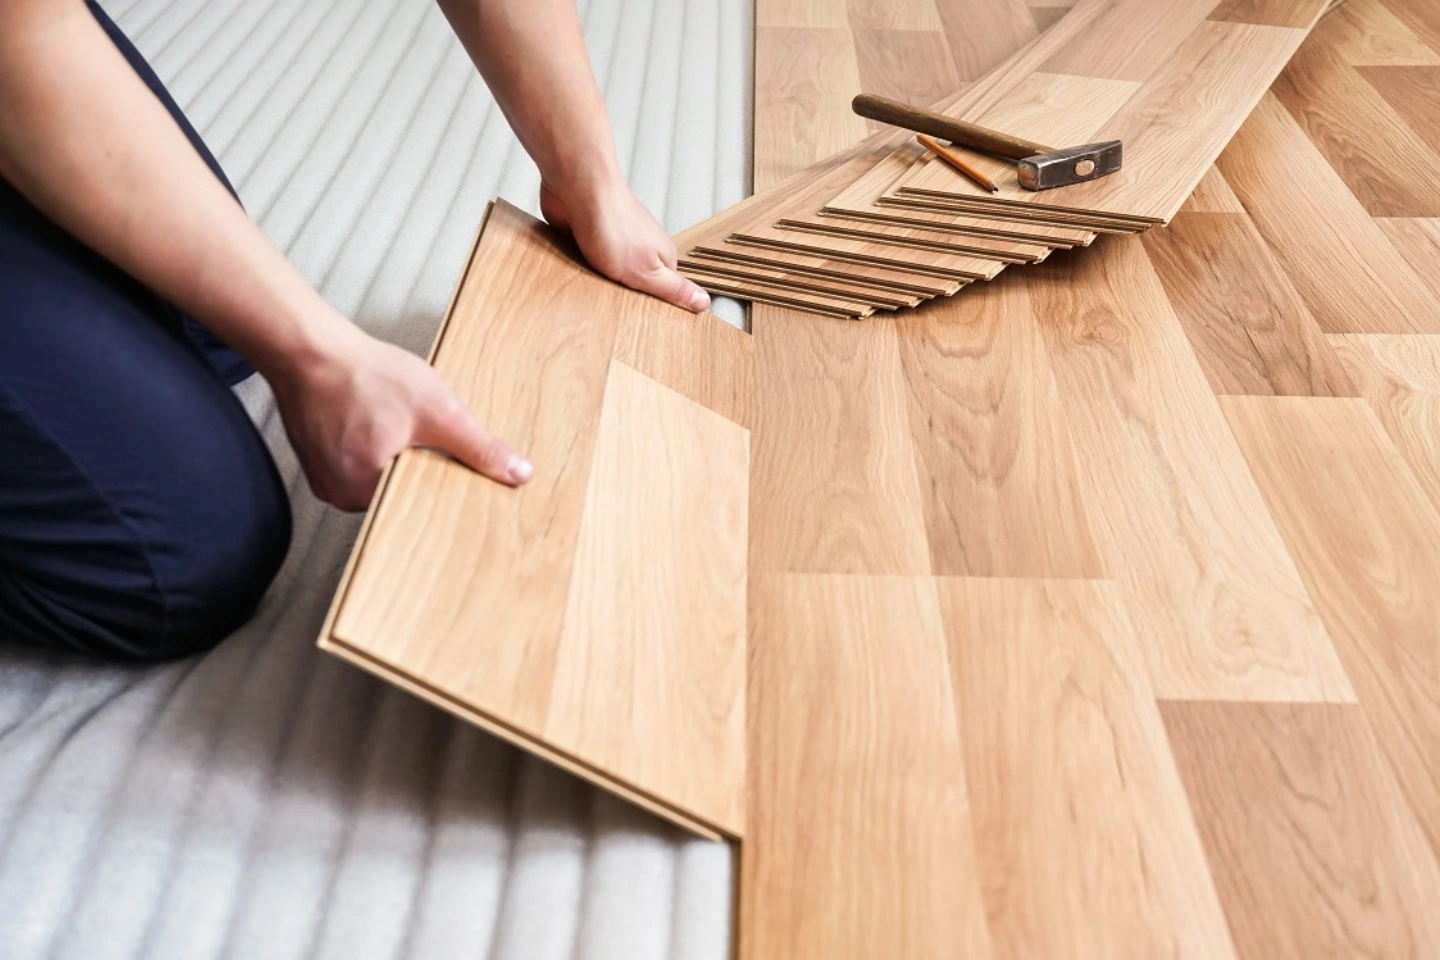 How to lay laminate flooring?